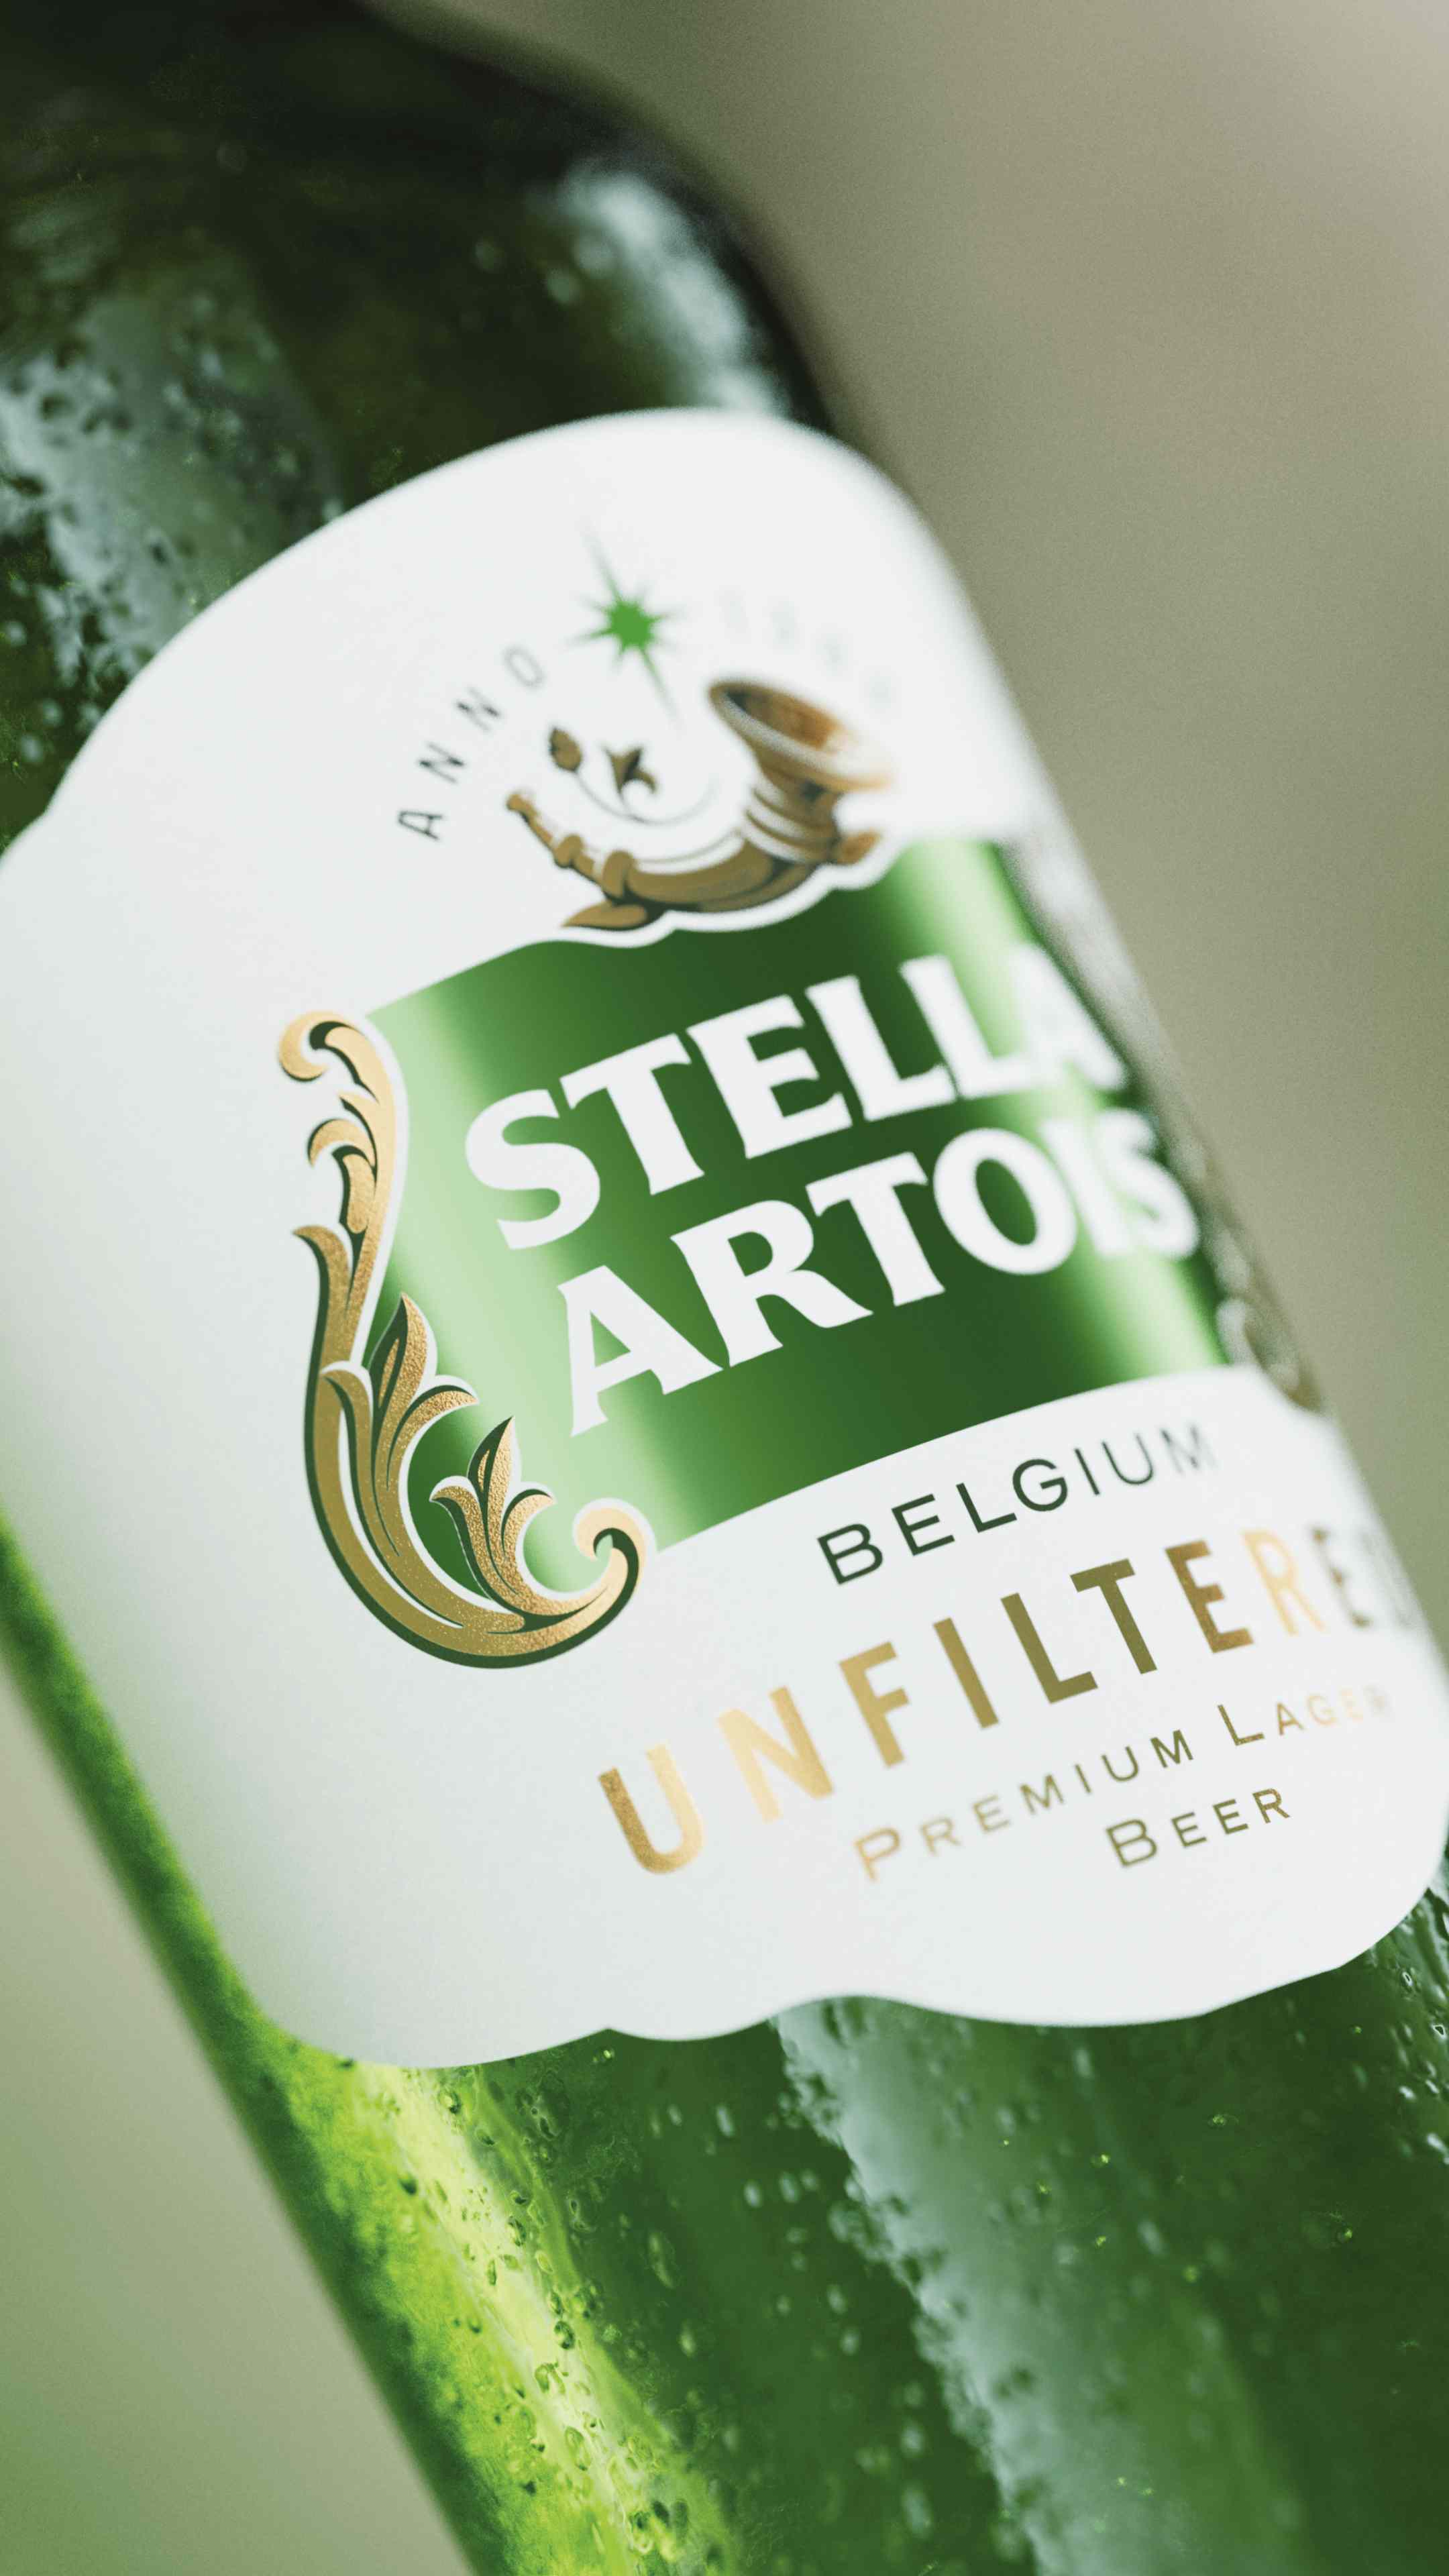 Stella Artois Unfiltered Bottle